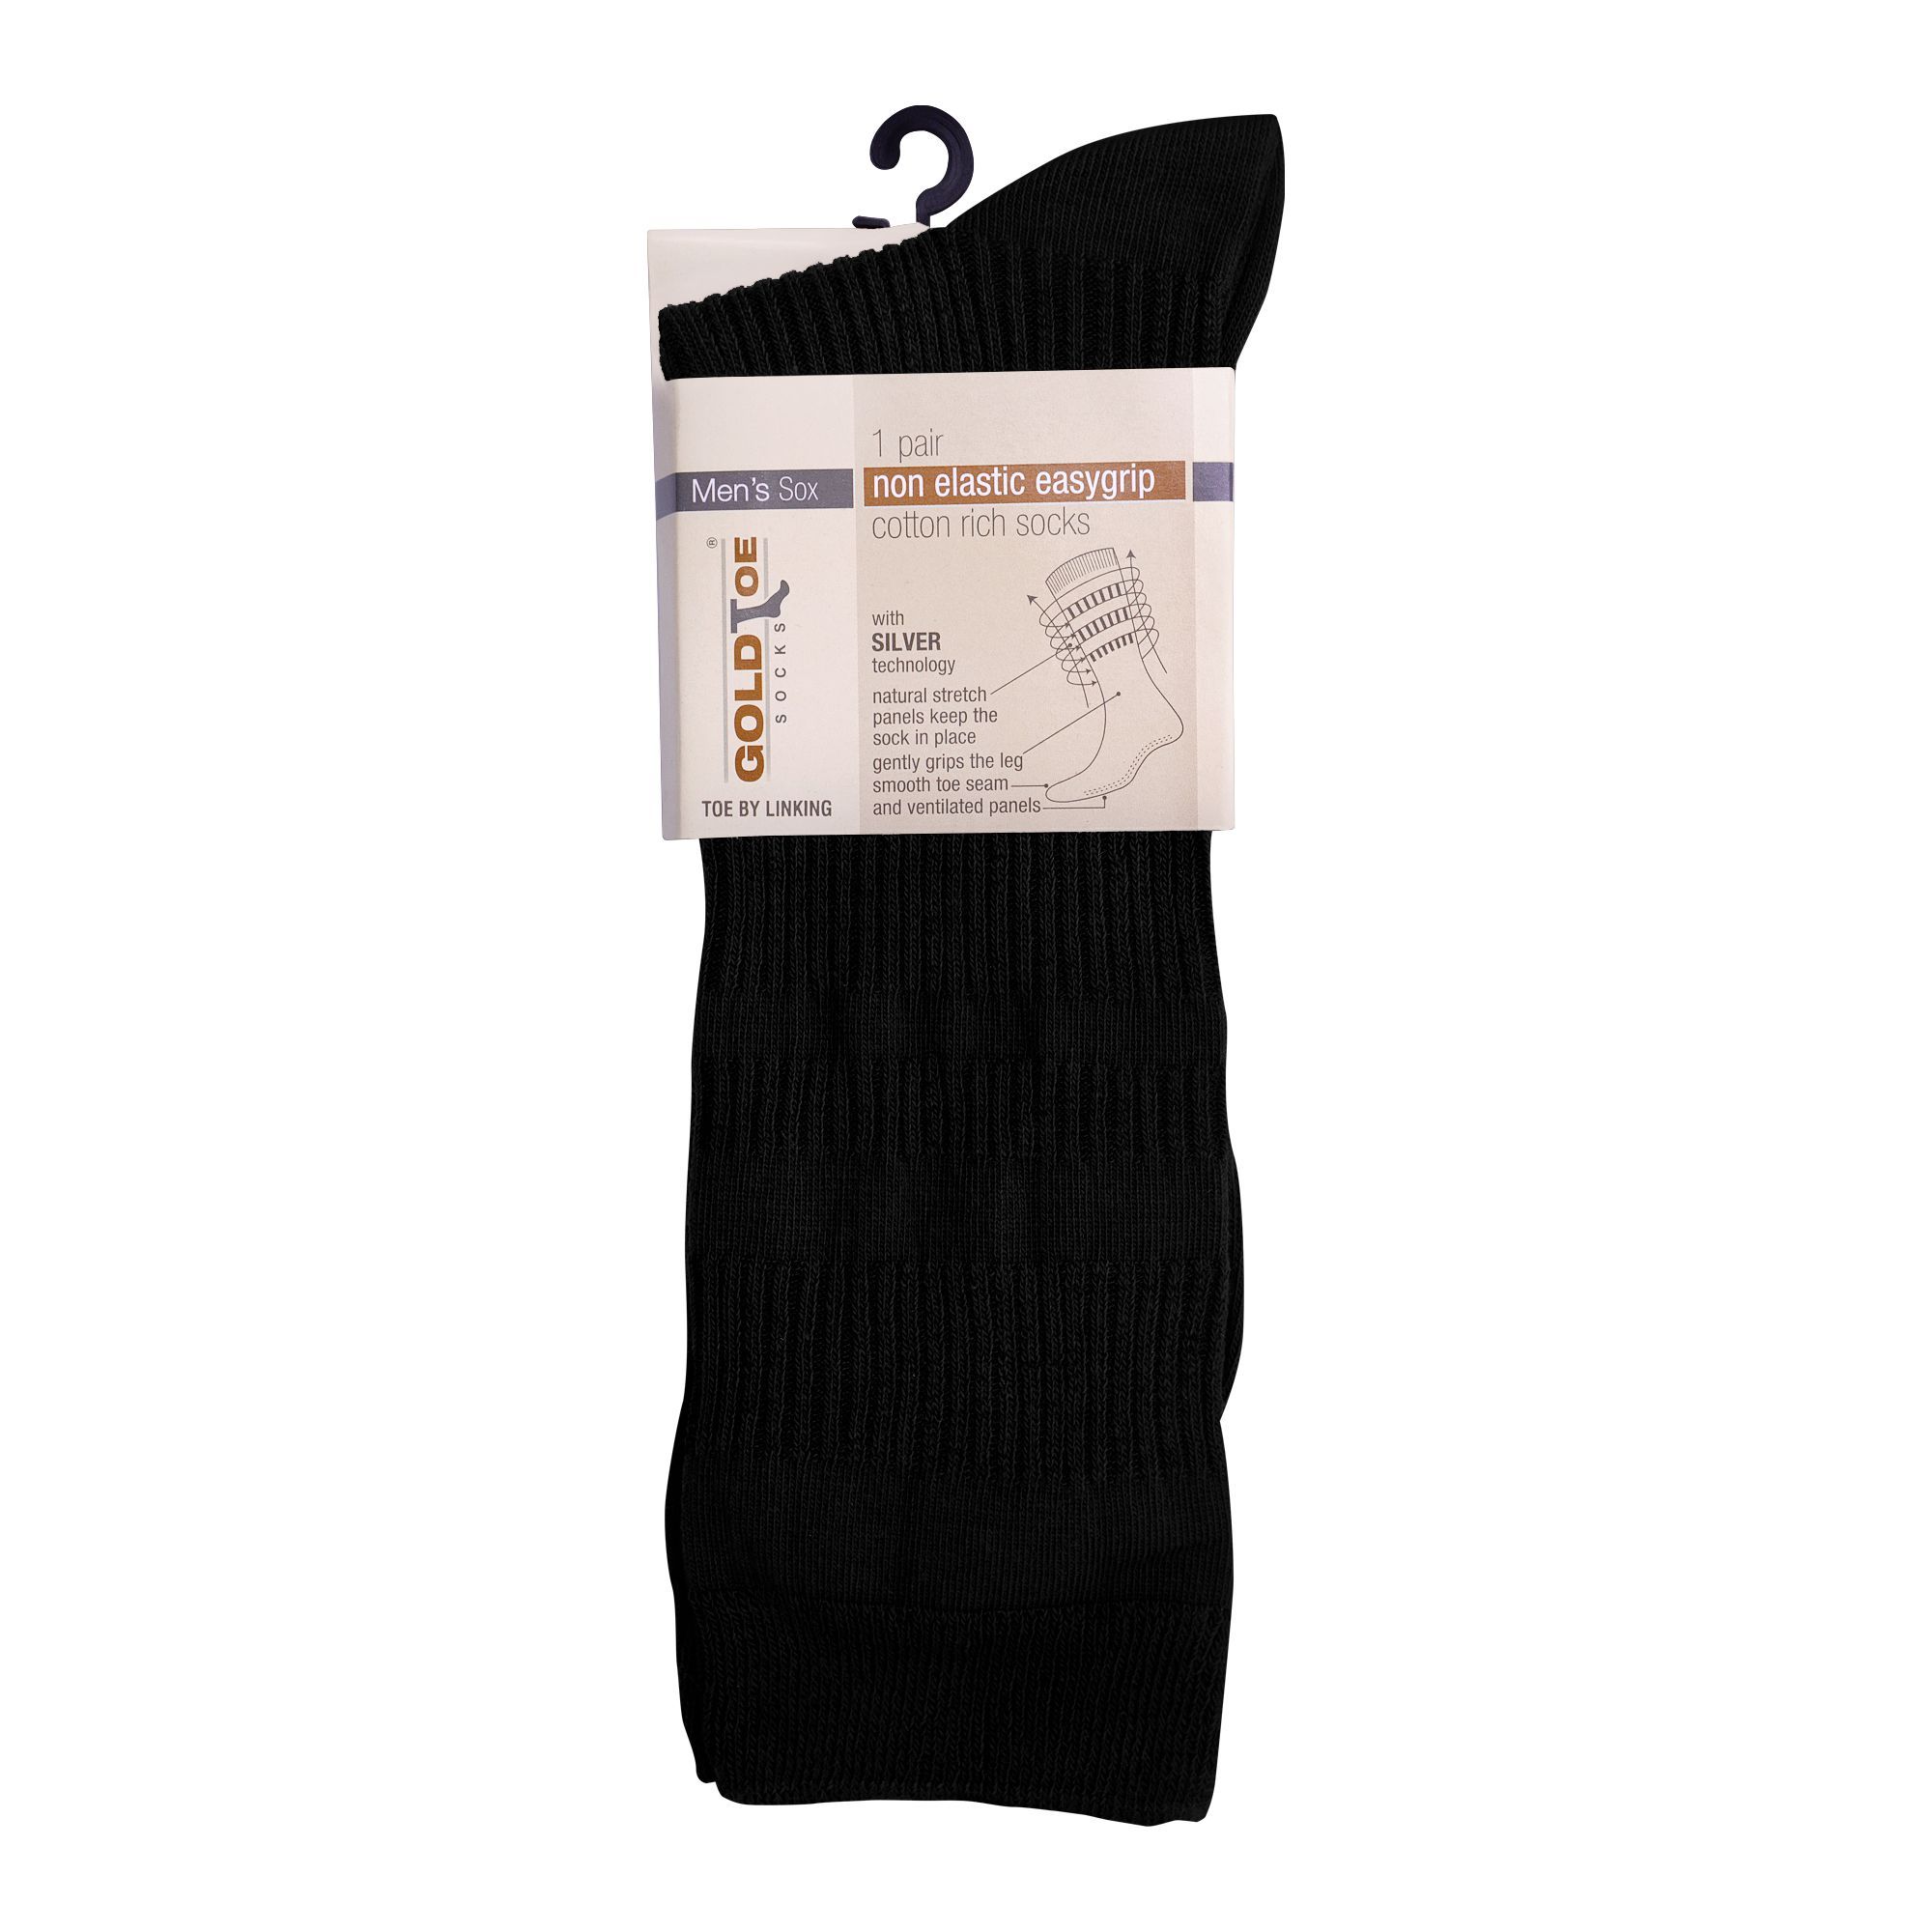 Buy Goldtoe Non Elastic Easygrip Cotton Rich Socks, 1 Pair, Black ...